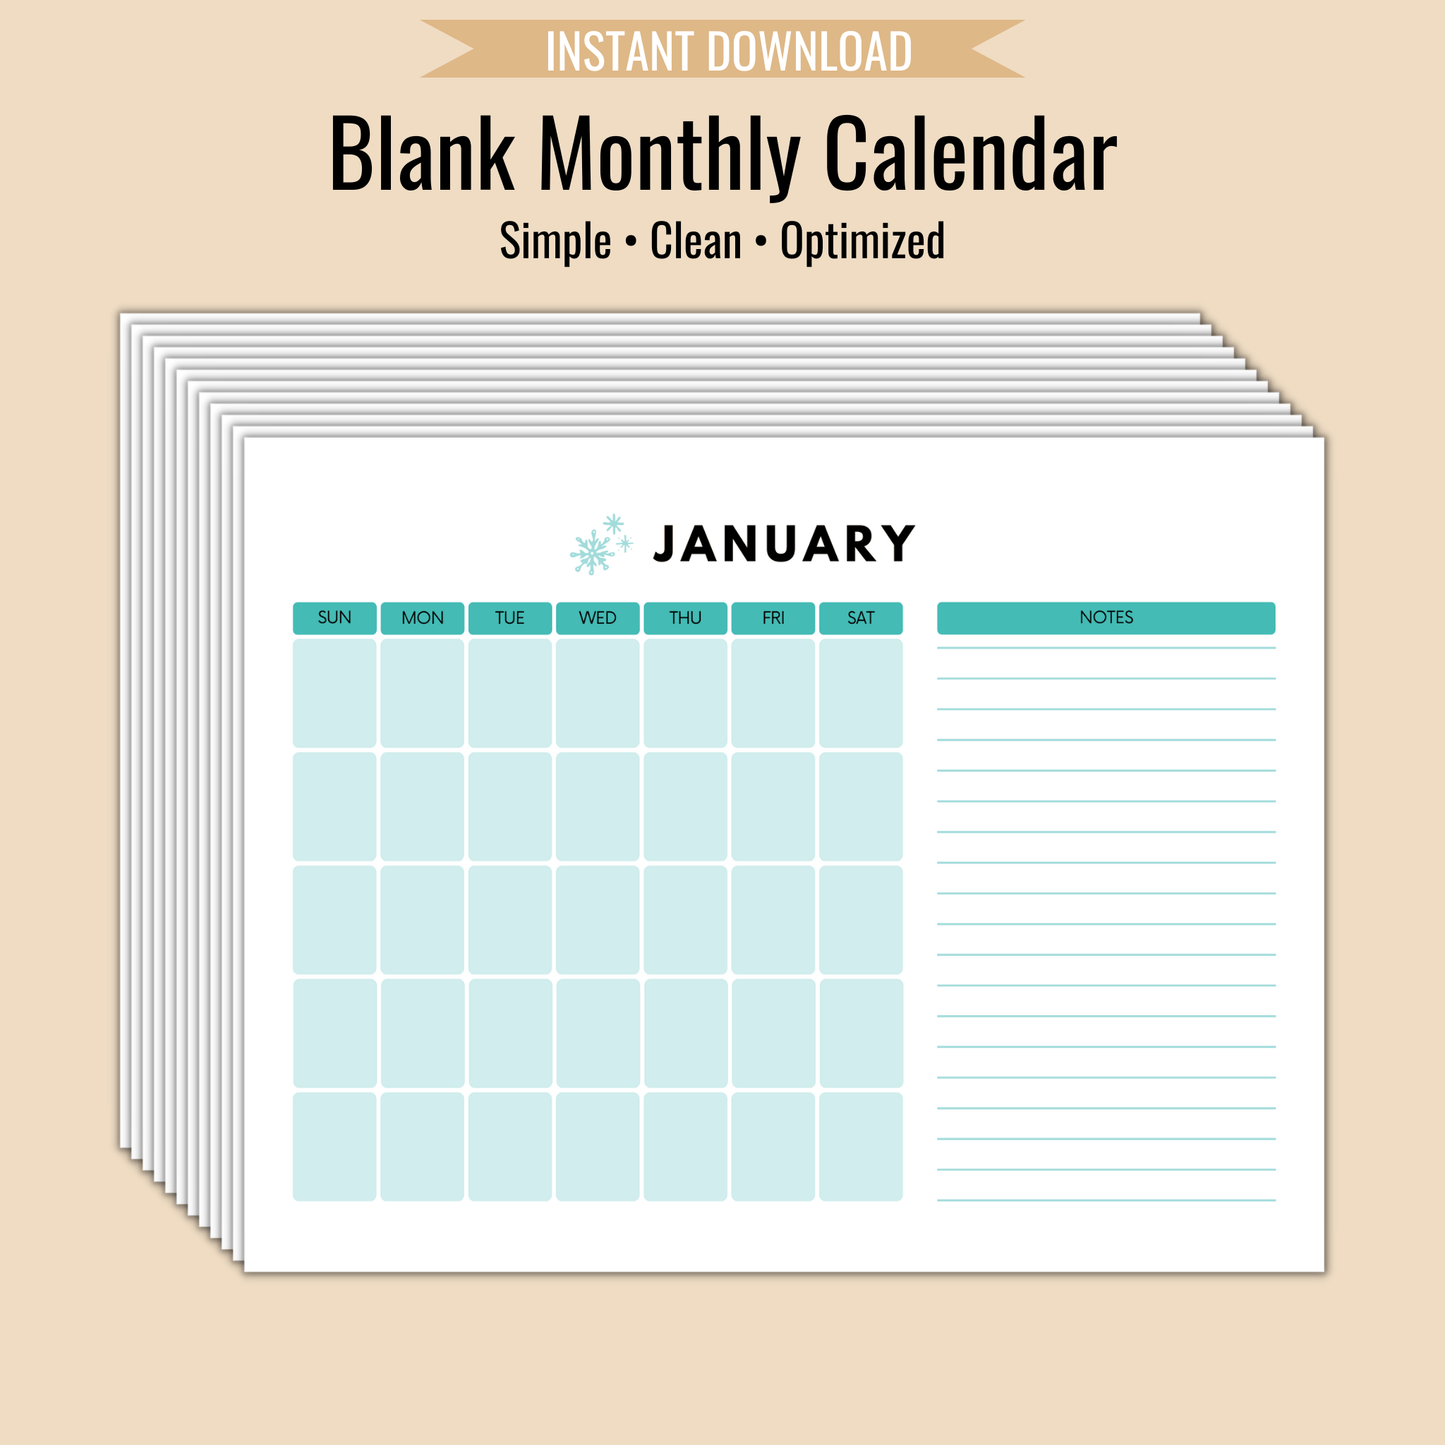 Blank Monthly Calendar (Printable & Reusable) - Camper FAQs